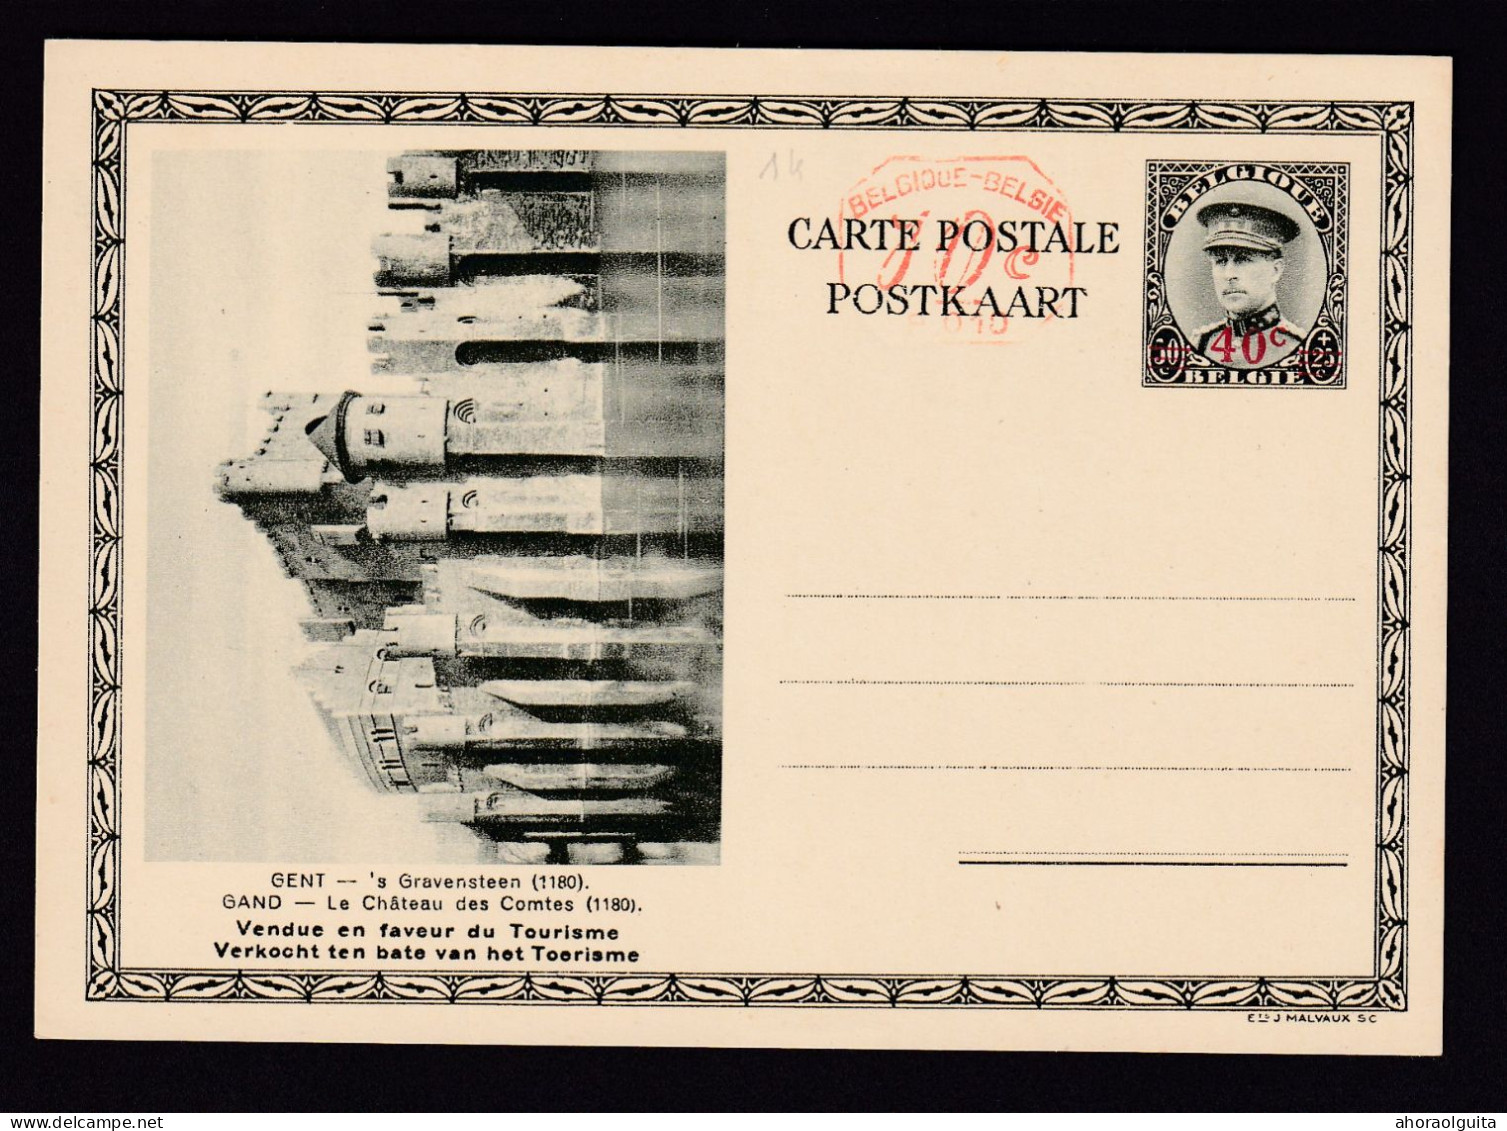 DDBB 896A -- Entier Illustré Képi No 27 M1 - Empreinte Mécanique 10 C P010  - ETAT NEUF - Geïllustreerde Briefkaarten (1971-2014) [BK]